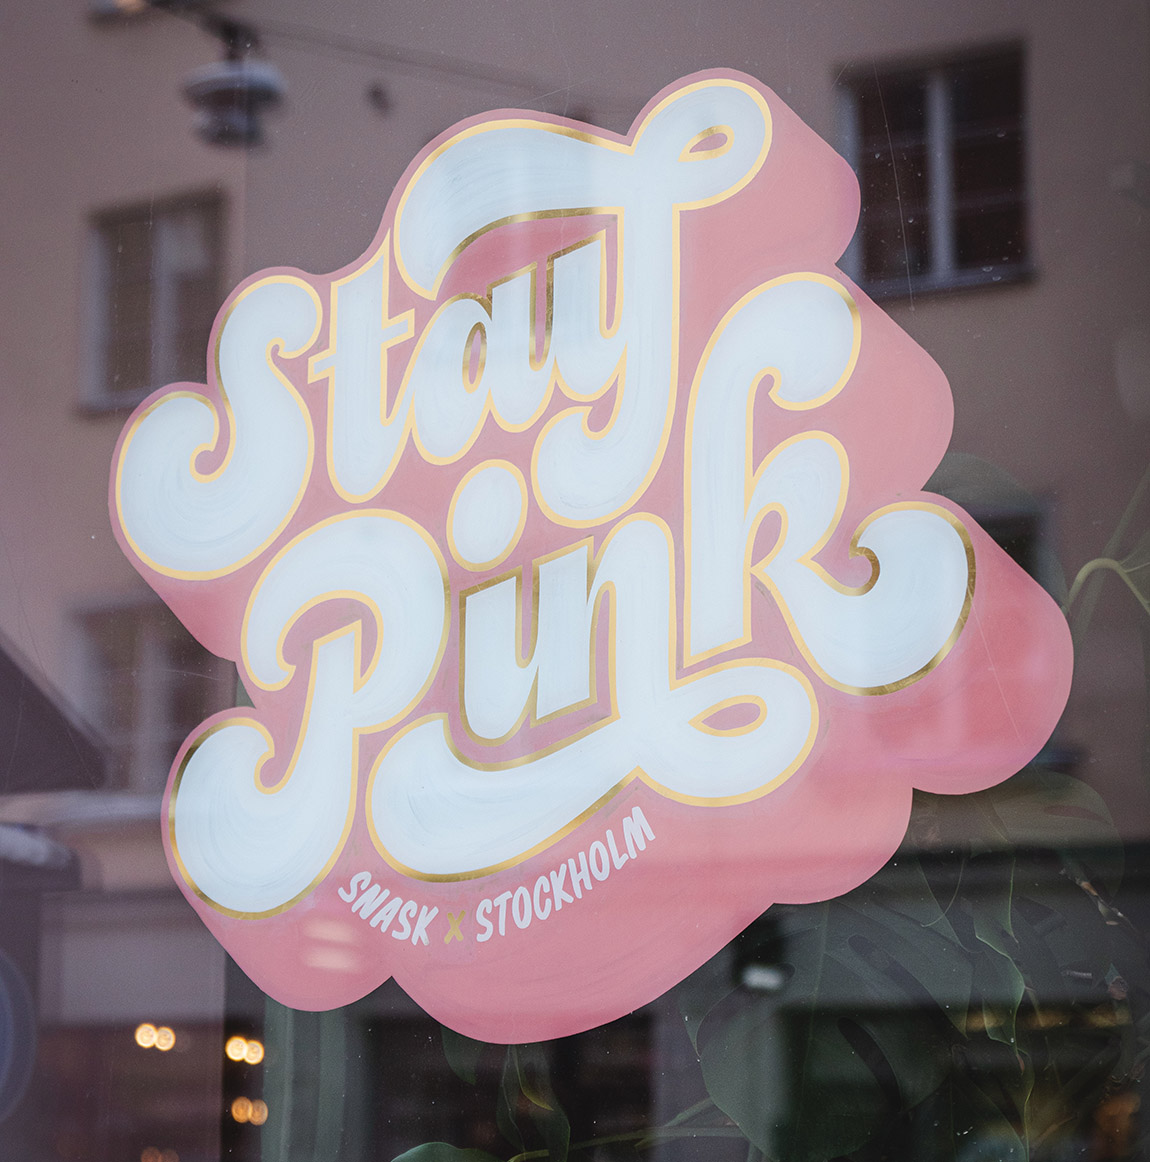 Snask: Pink, Swedish creativity building world-class brands